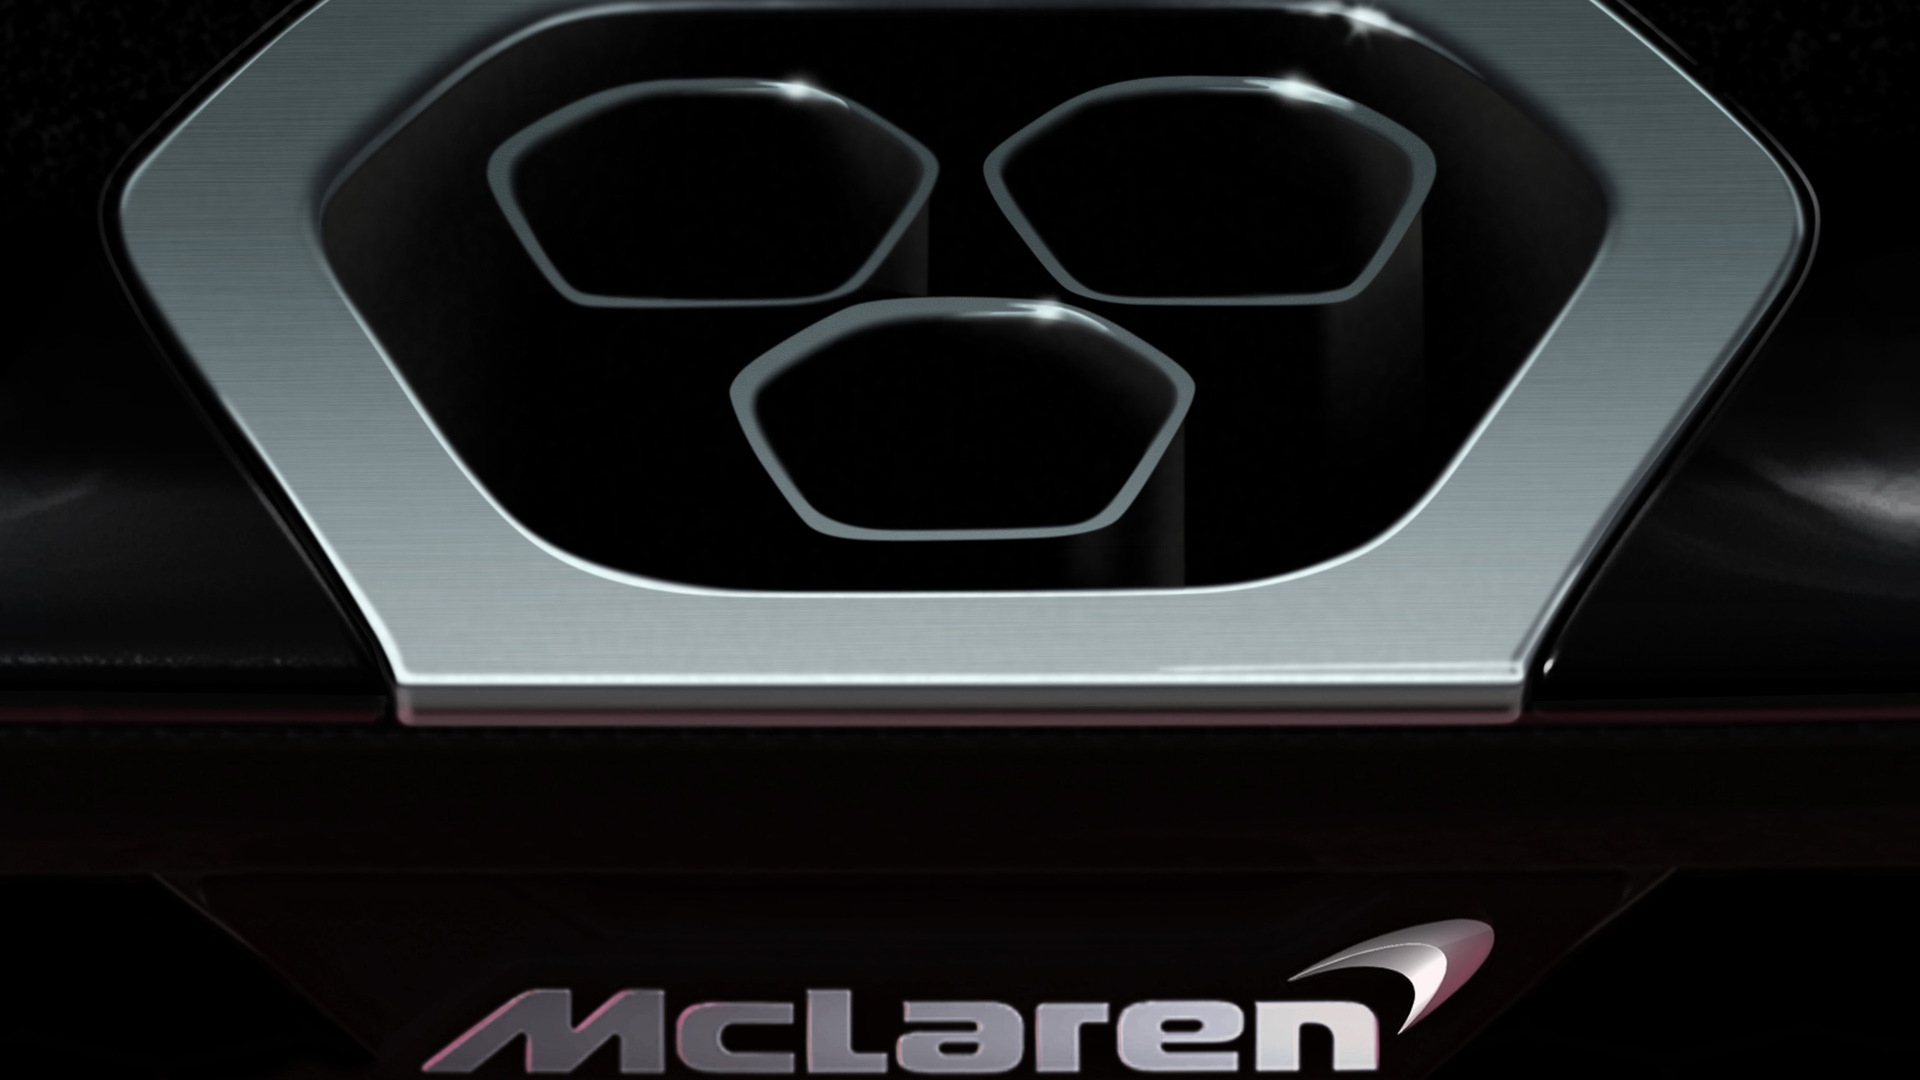 Teaser for McLaren P15 supercar debuting in first quarter of 2018